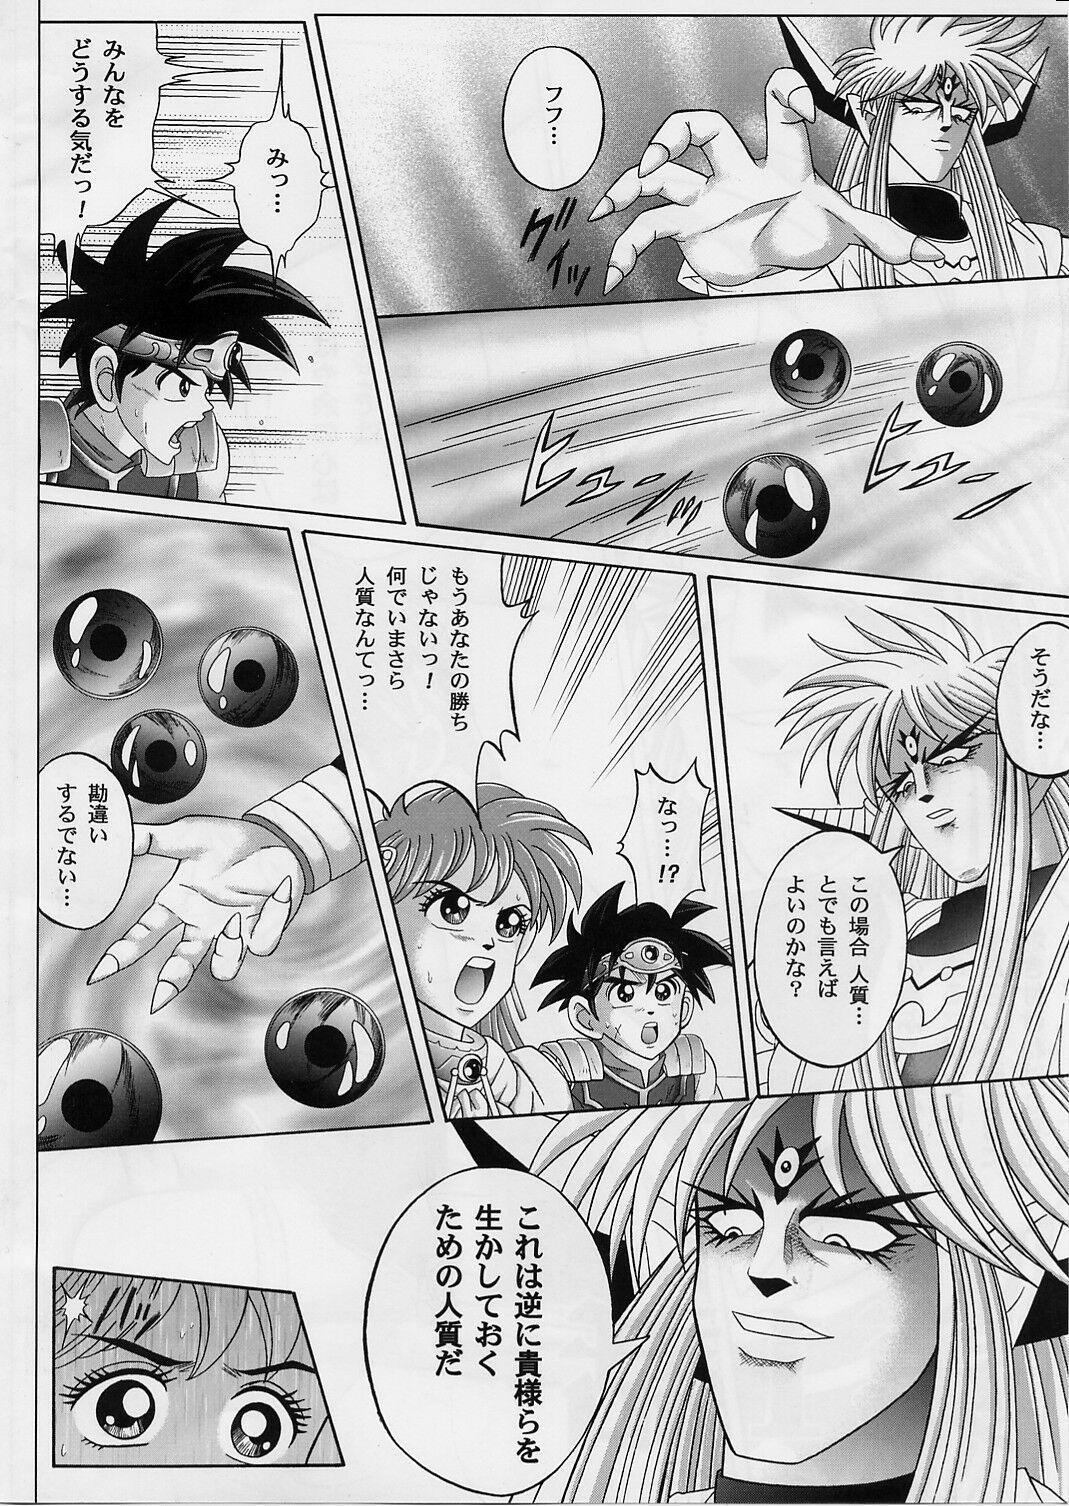 Sextape DIME ALLIANCE 2 - Dragon quest dai no daibouken Mallu - Page 5